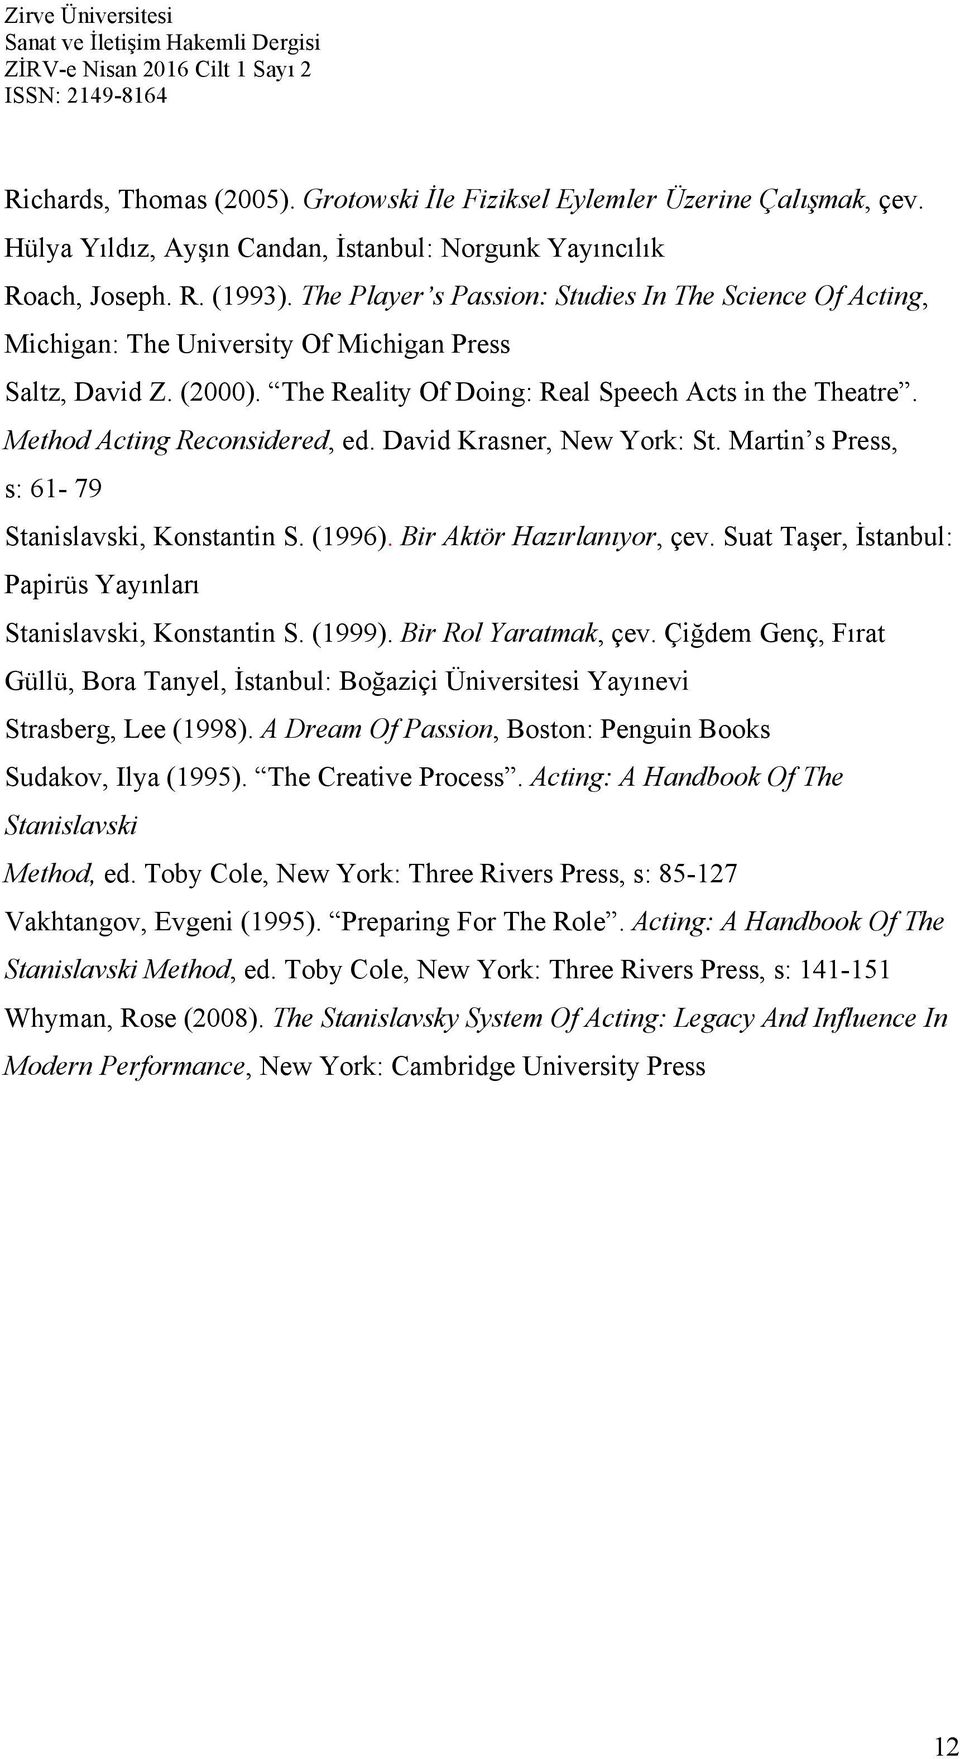 Method Acting Reconsidered, ed. David Krasner, New York: St. Martin s Press, s: 61-79 Stanislavski, Konstantin S. (1996). Bir Aktör Hazırlanıyor, çev.